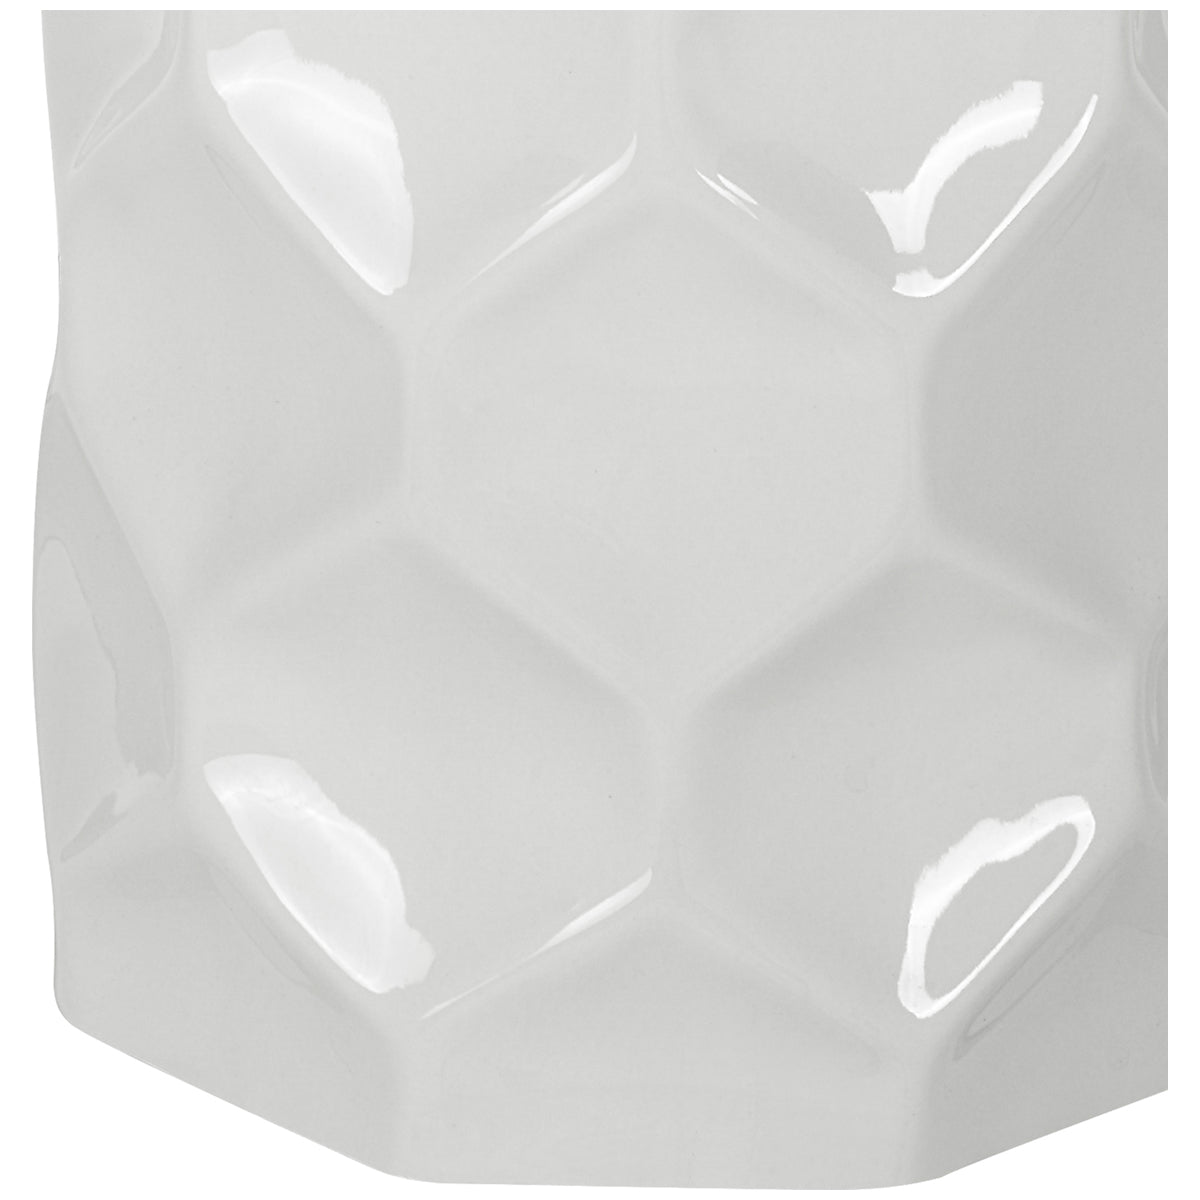 Uttermost Honeycomb White Table Lamp